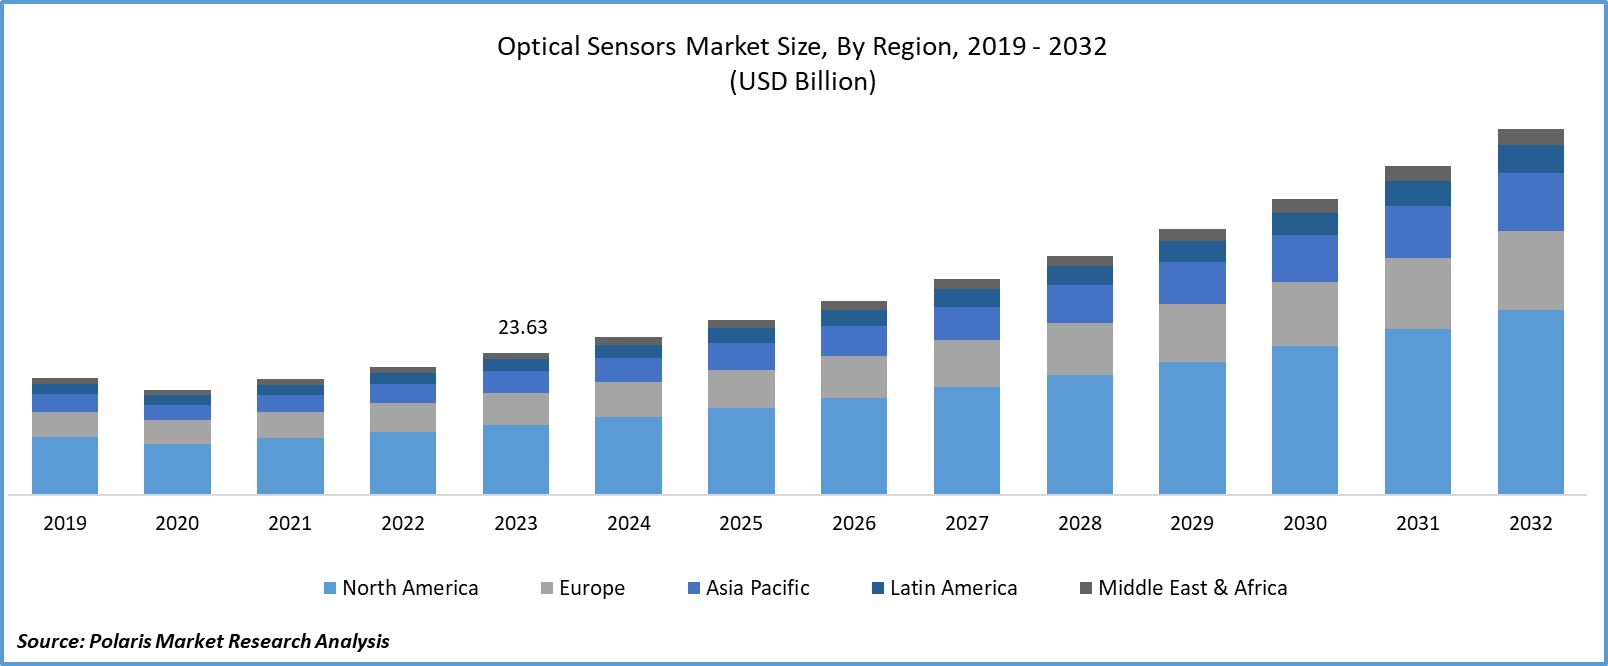 Optical Sensors Market Size